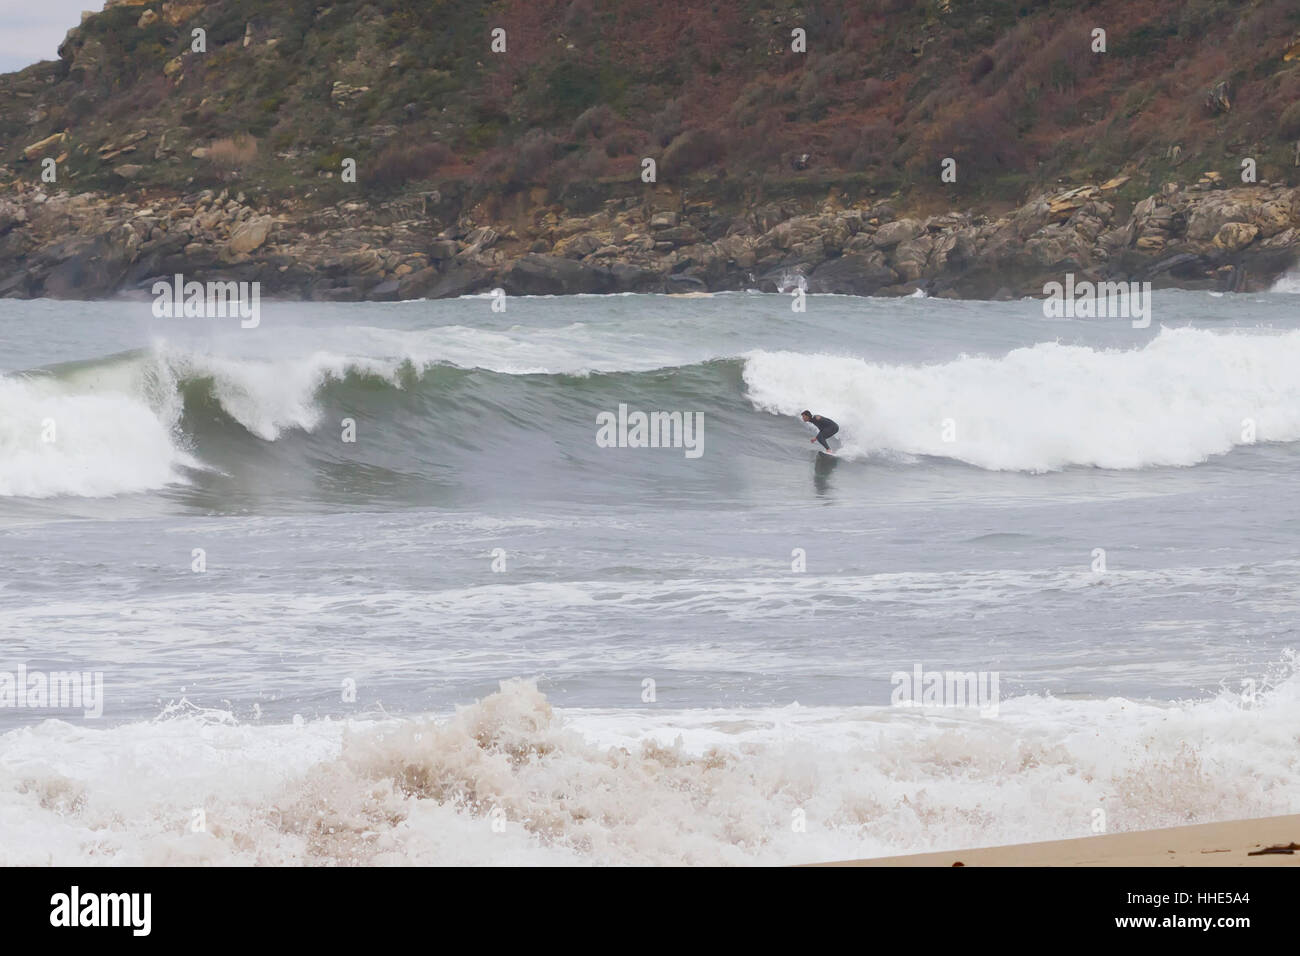 Ein Surfer Wellen in Donostia Strand (Donostia, Guipuzcoa, Baskenland, Spanien). Stockfoto